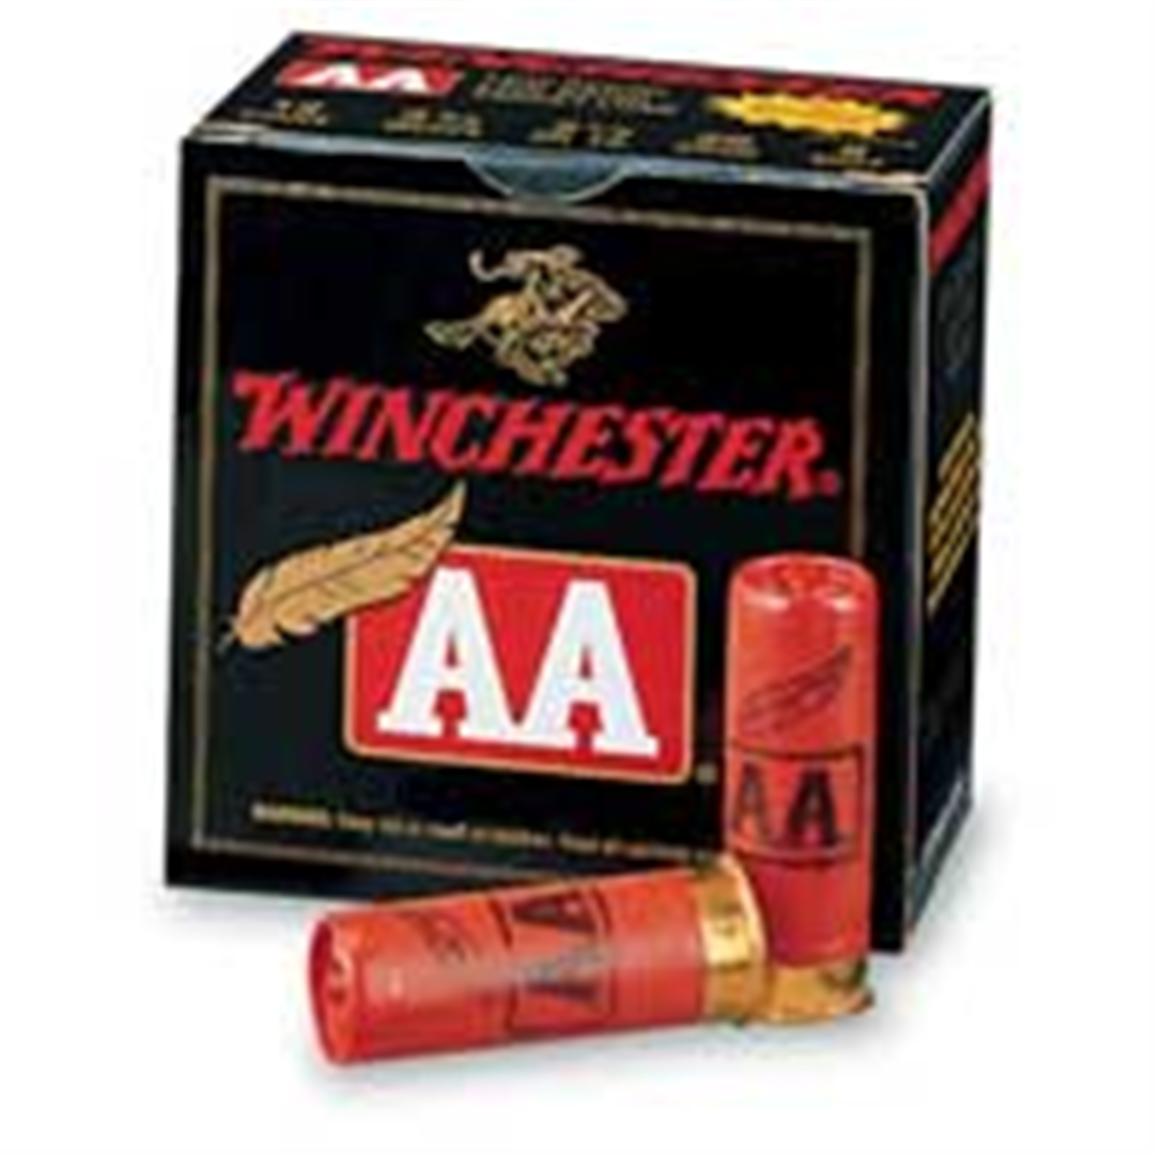 winchester-aa-shotshells-12-gauge-2-3-4-2-3-4-dram-equiv-1-oz-9-25